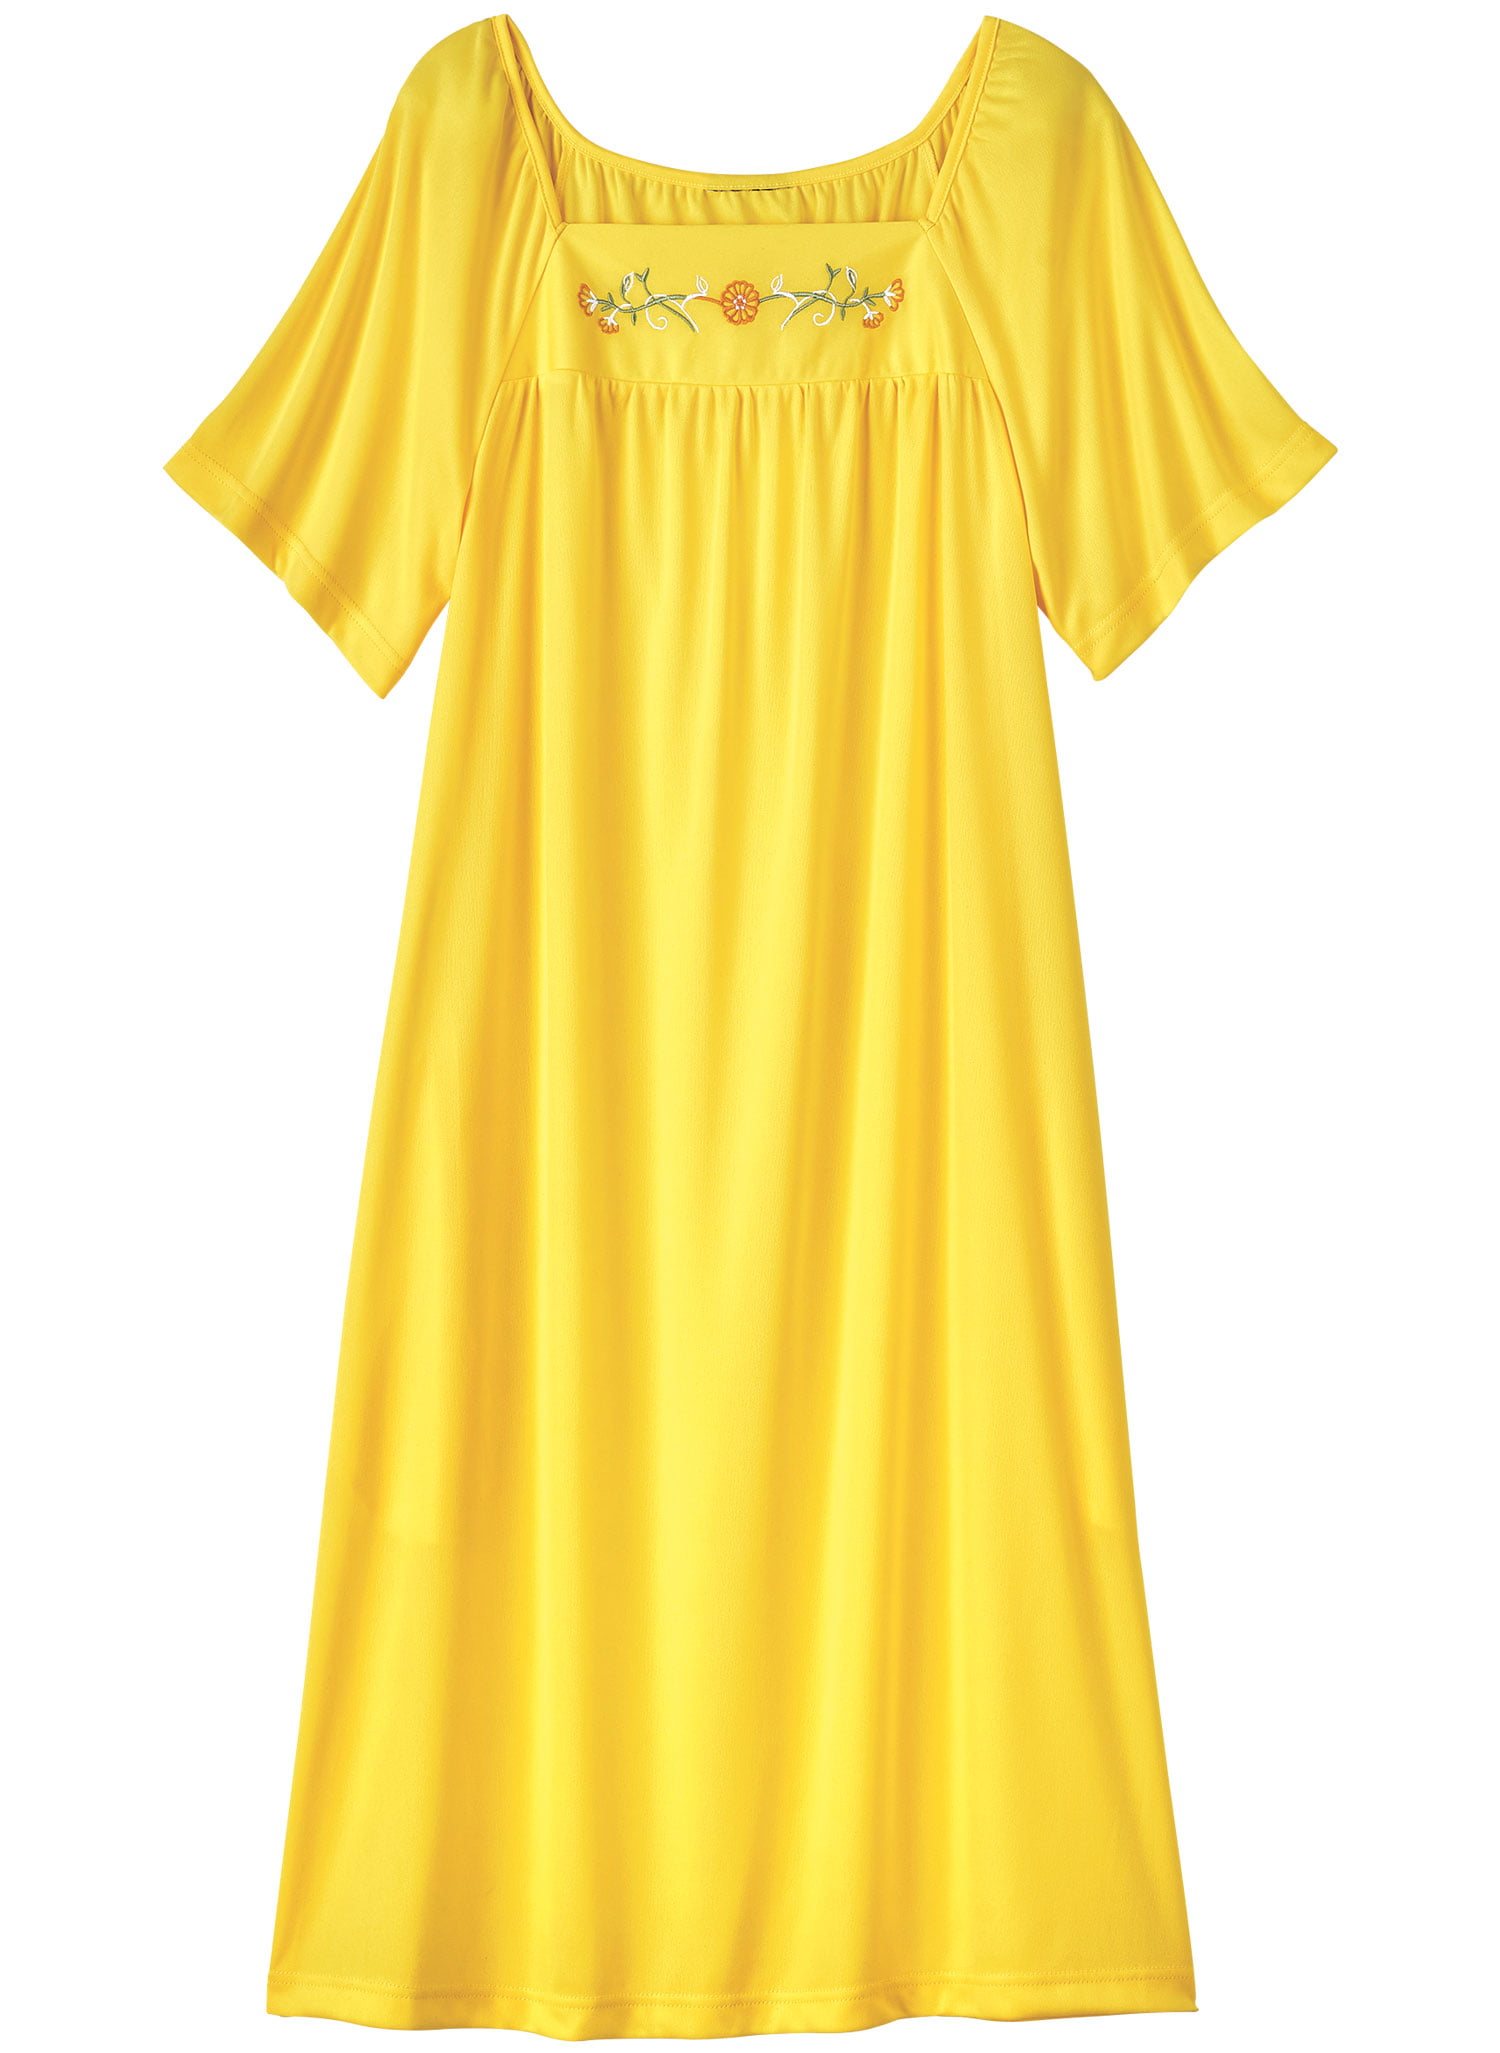 AmeriMark Womens Solid Embroidered House Dress with Pockets Muu Muu Nightgown